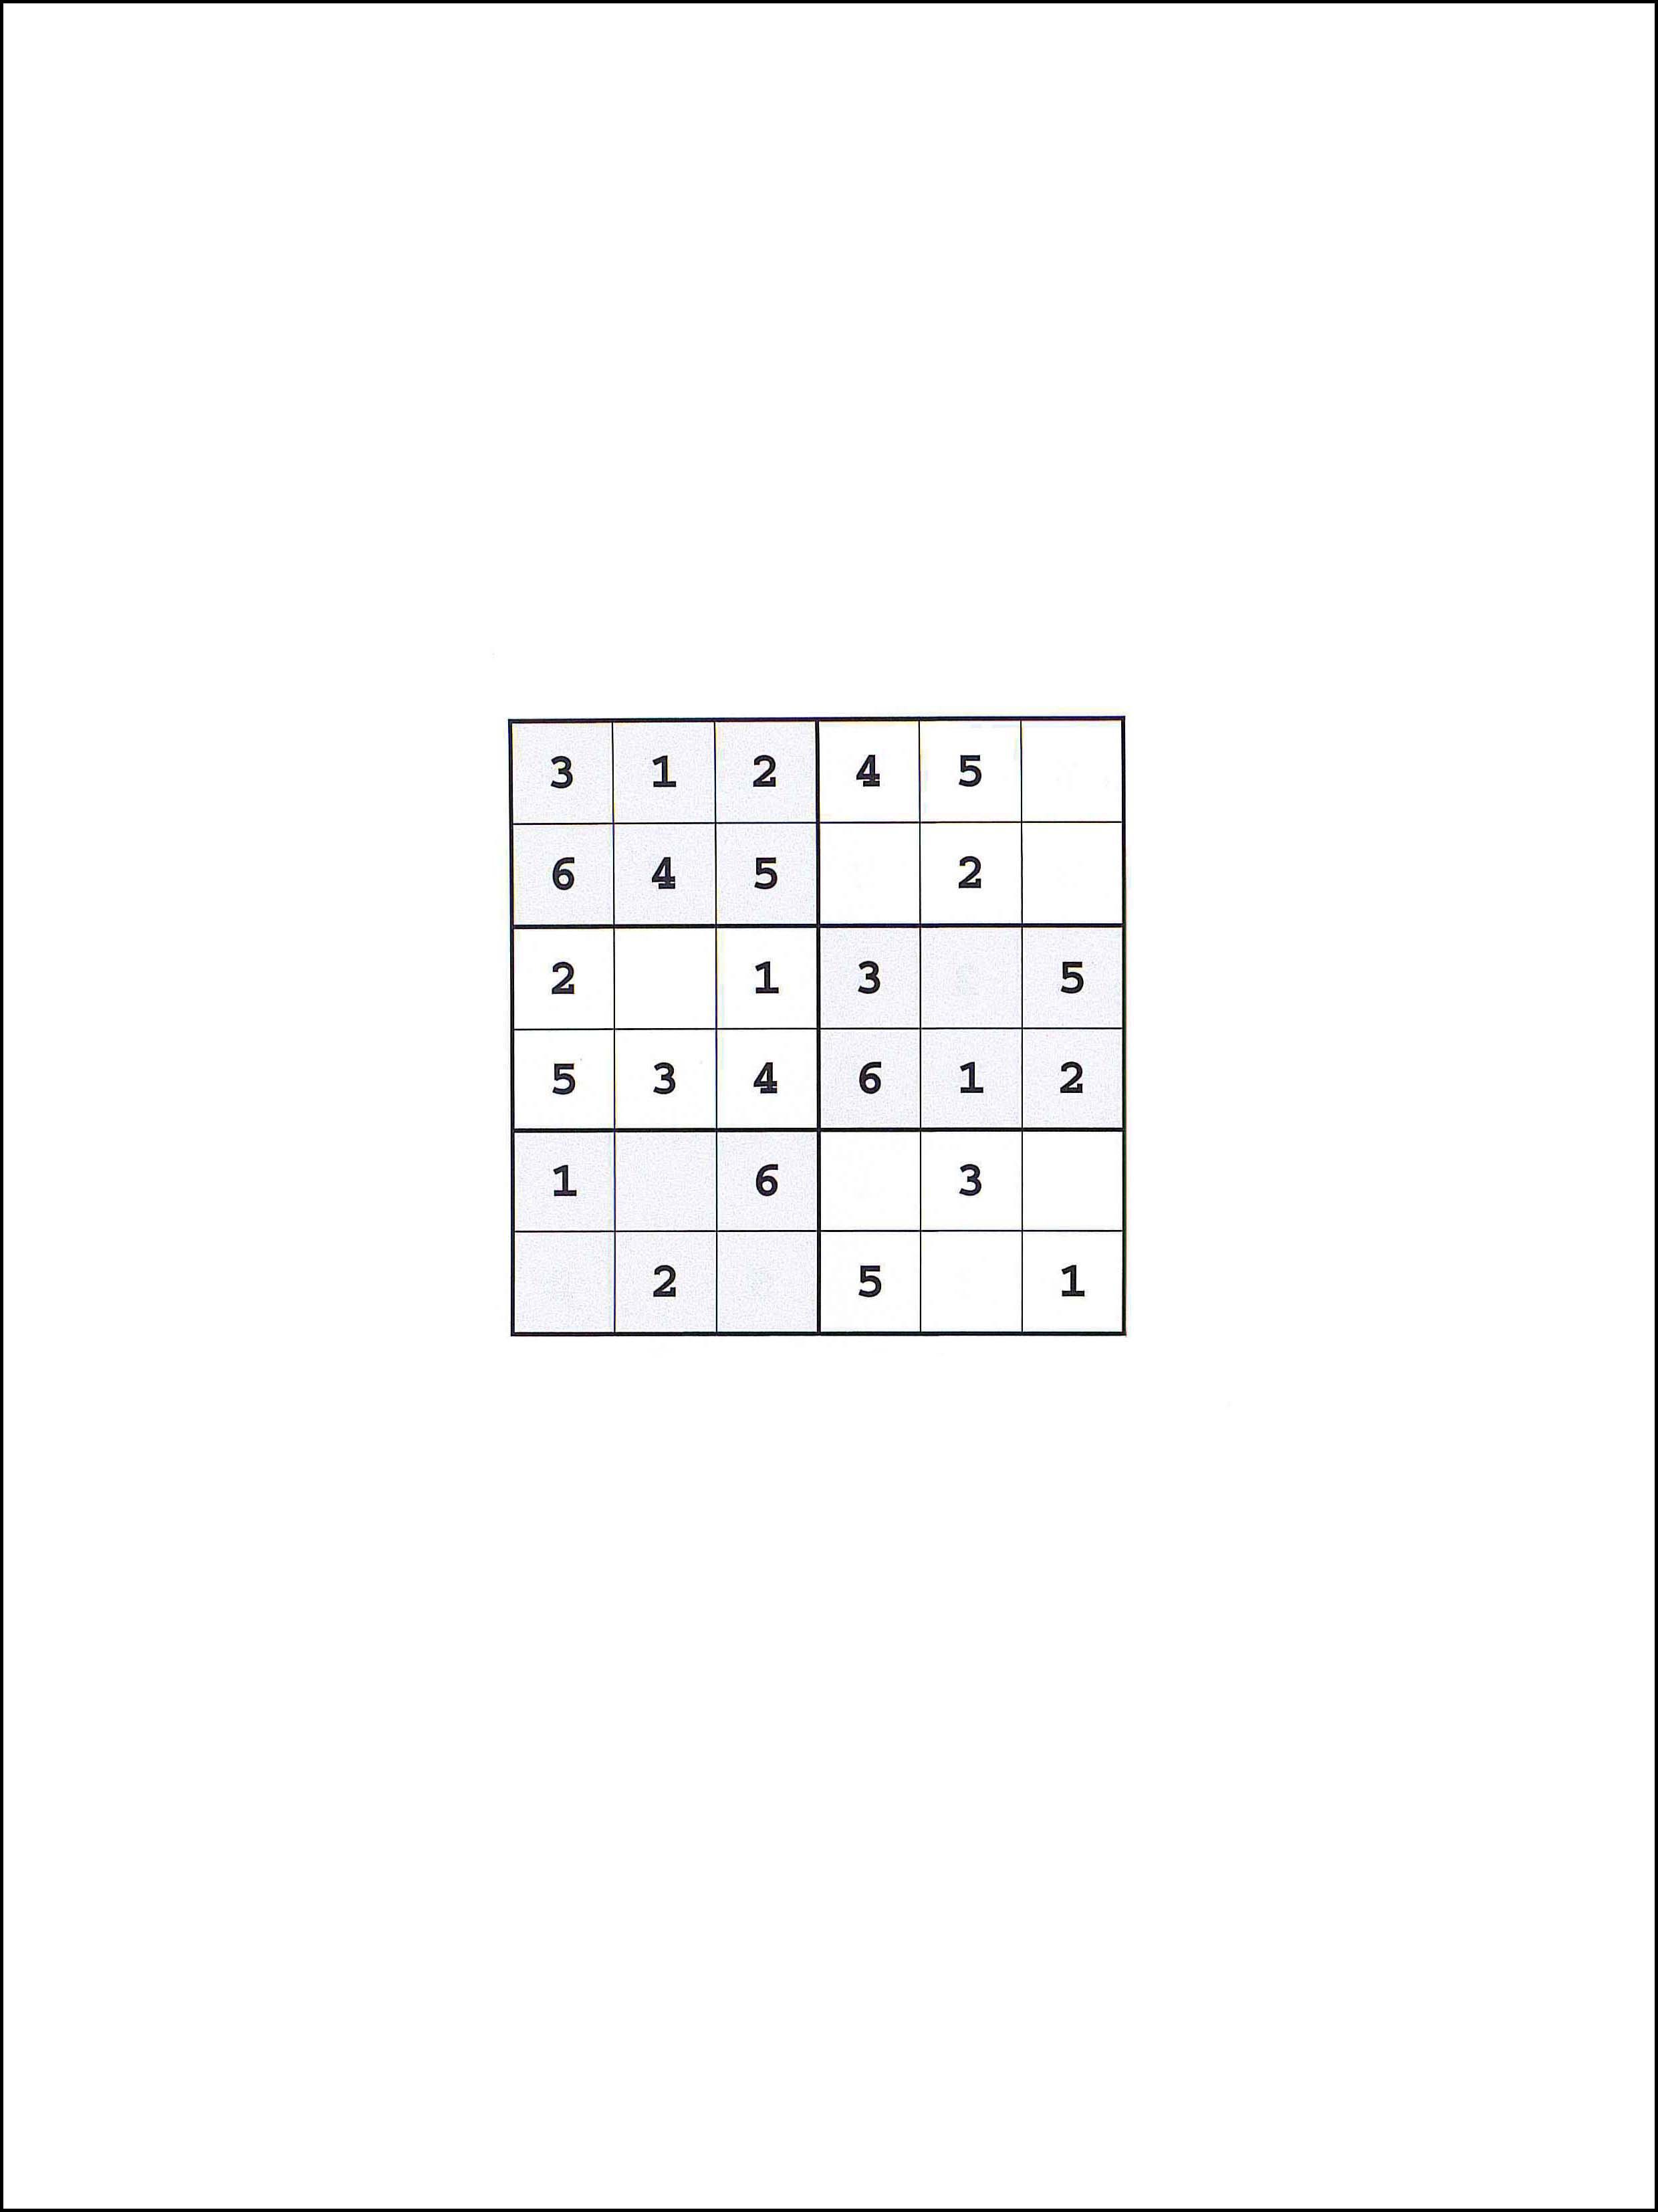 6x6 सुडोकु 4